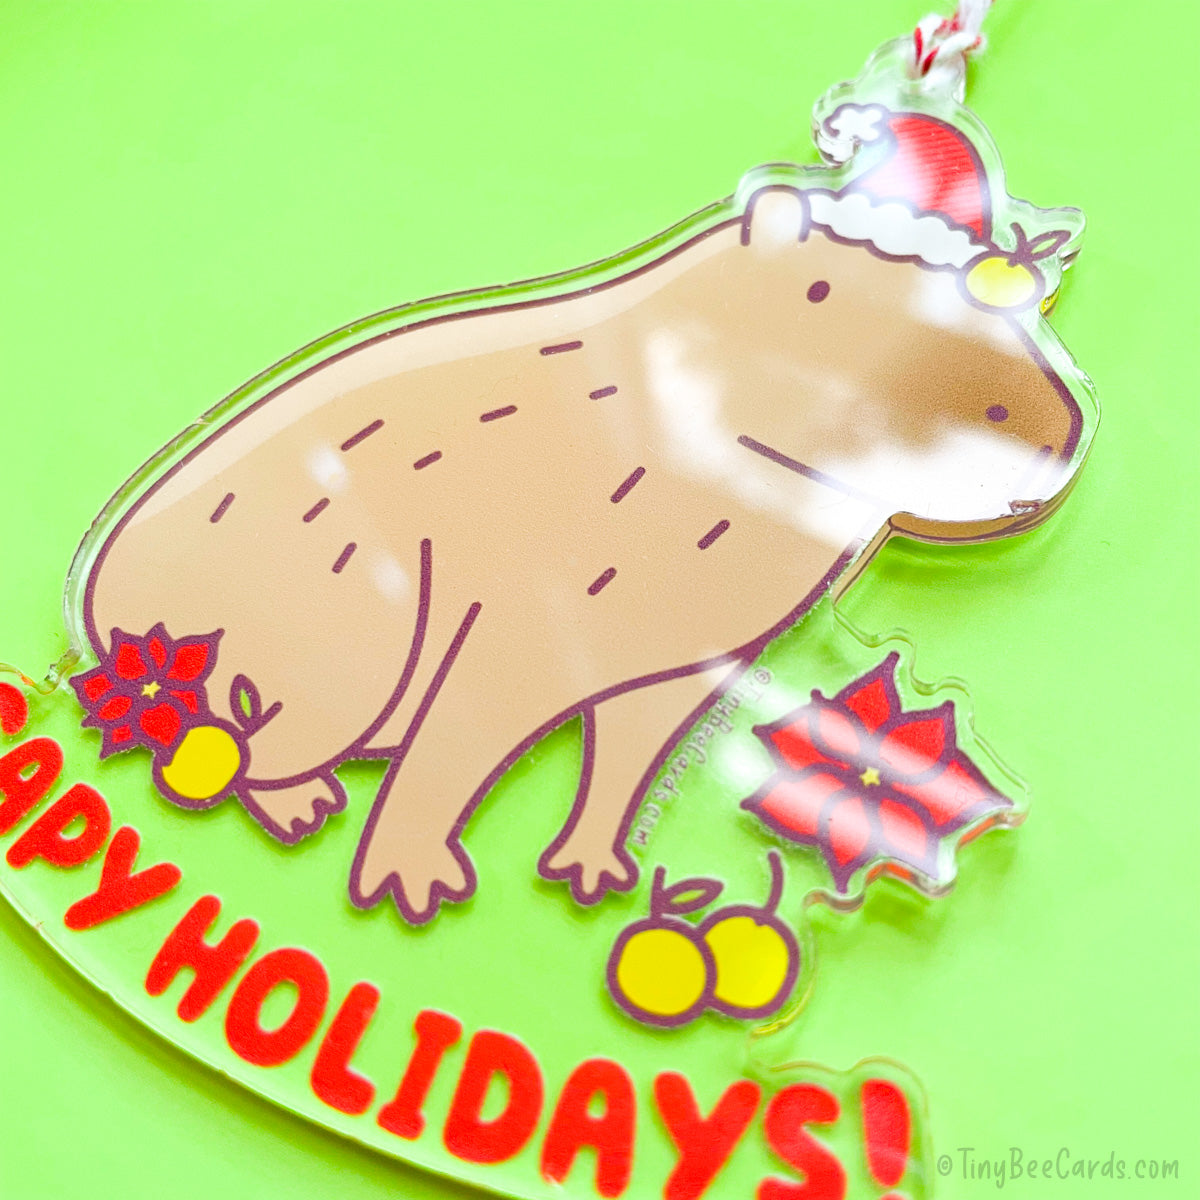 Capybara Christmas Ornament